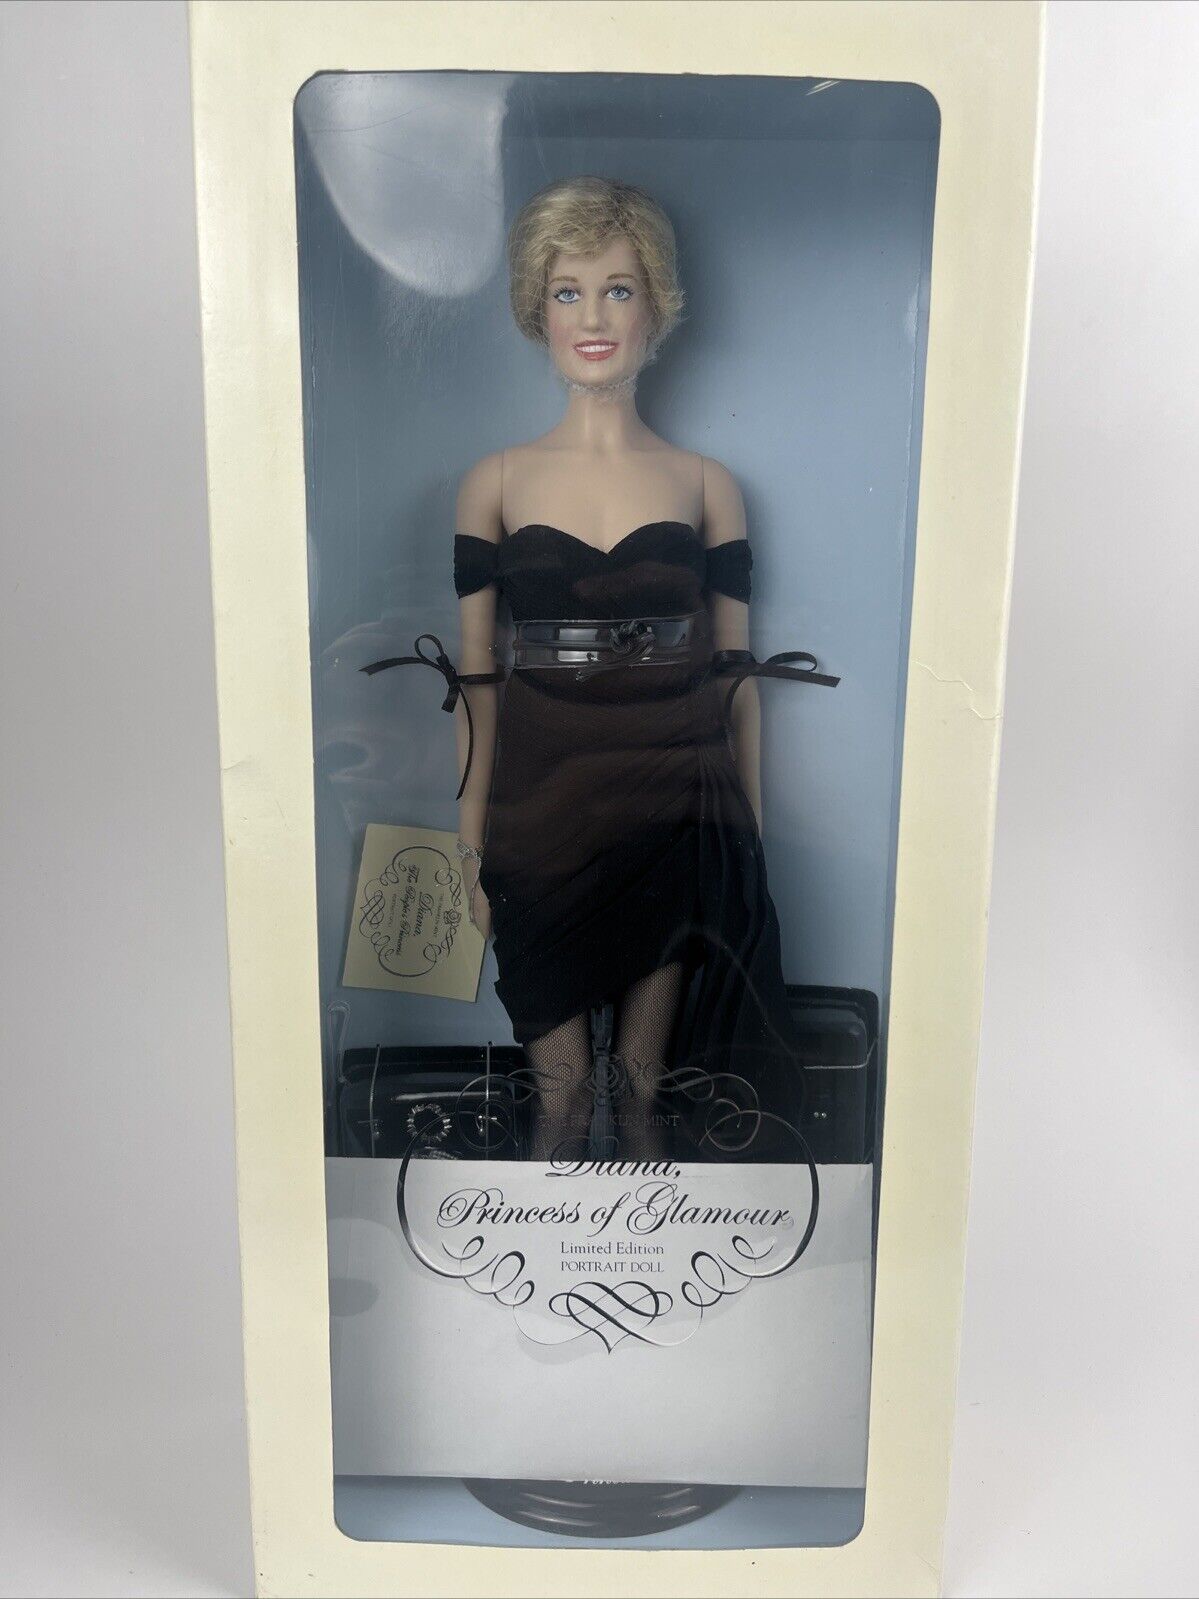 Franklin Mint Diana, Princess of Glamour Limited Edition Portrait Doll w COA NIB